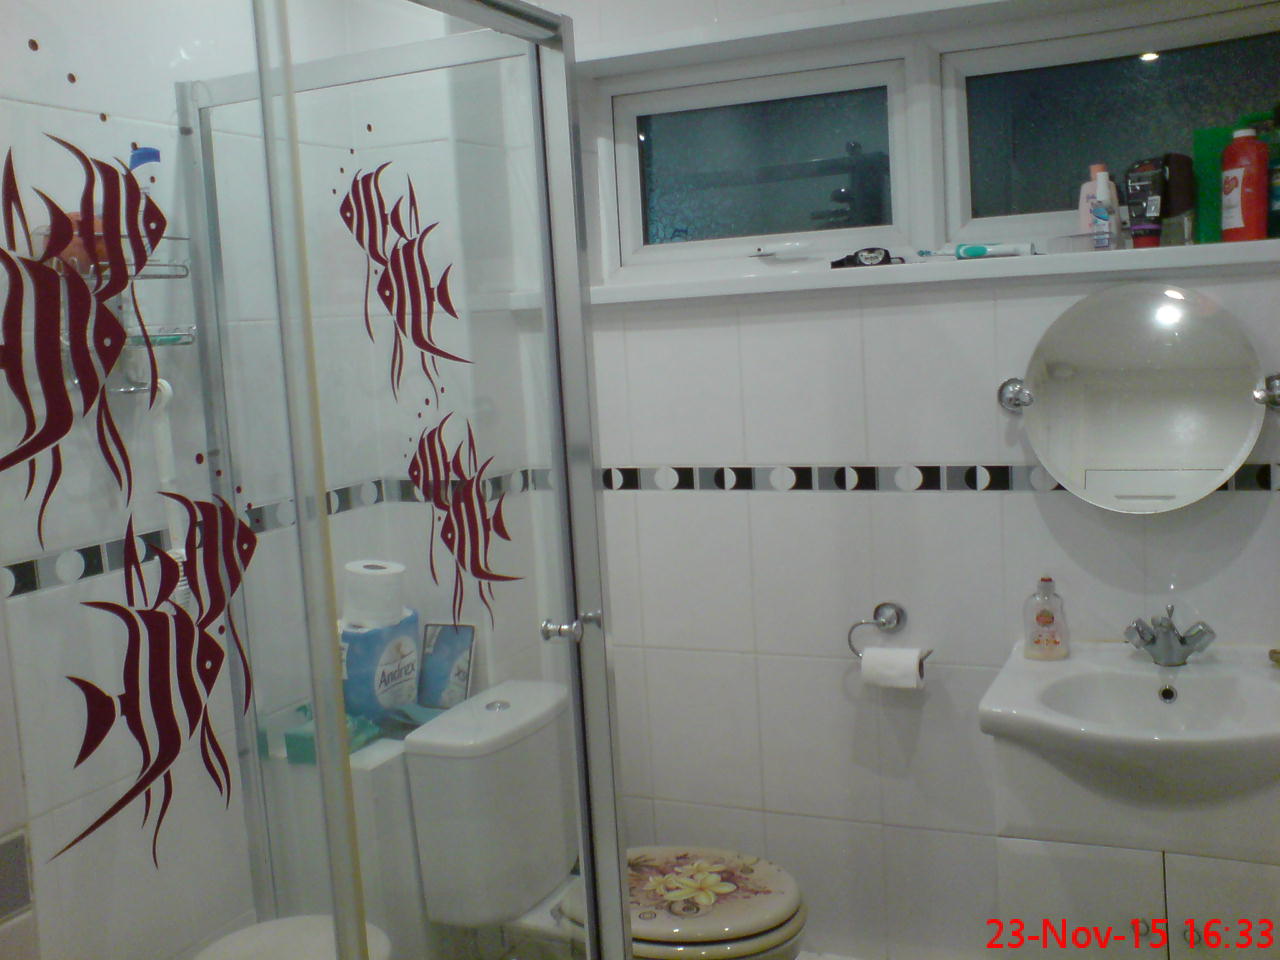 ImagesGarden/2014 Bathroom Shower.jpg